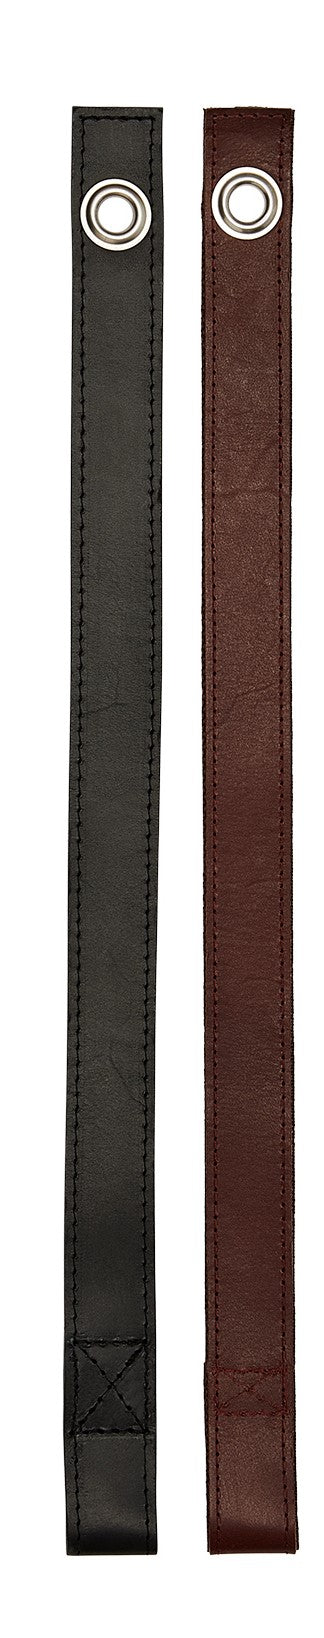 Squarely Copenhagen - HoldON læder stropper, 2 farver